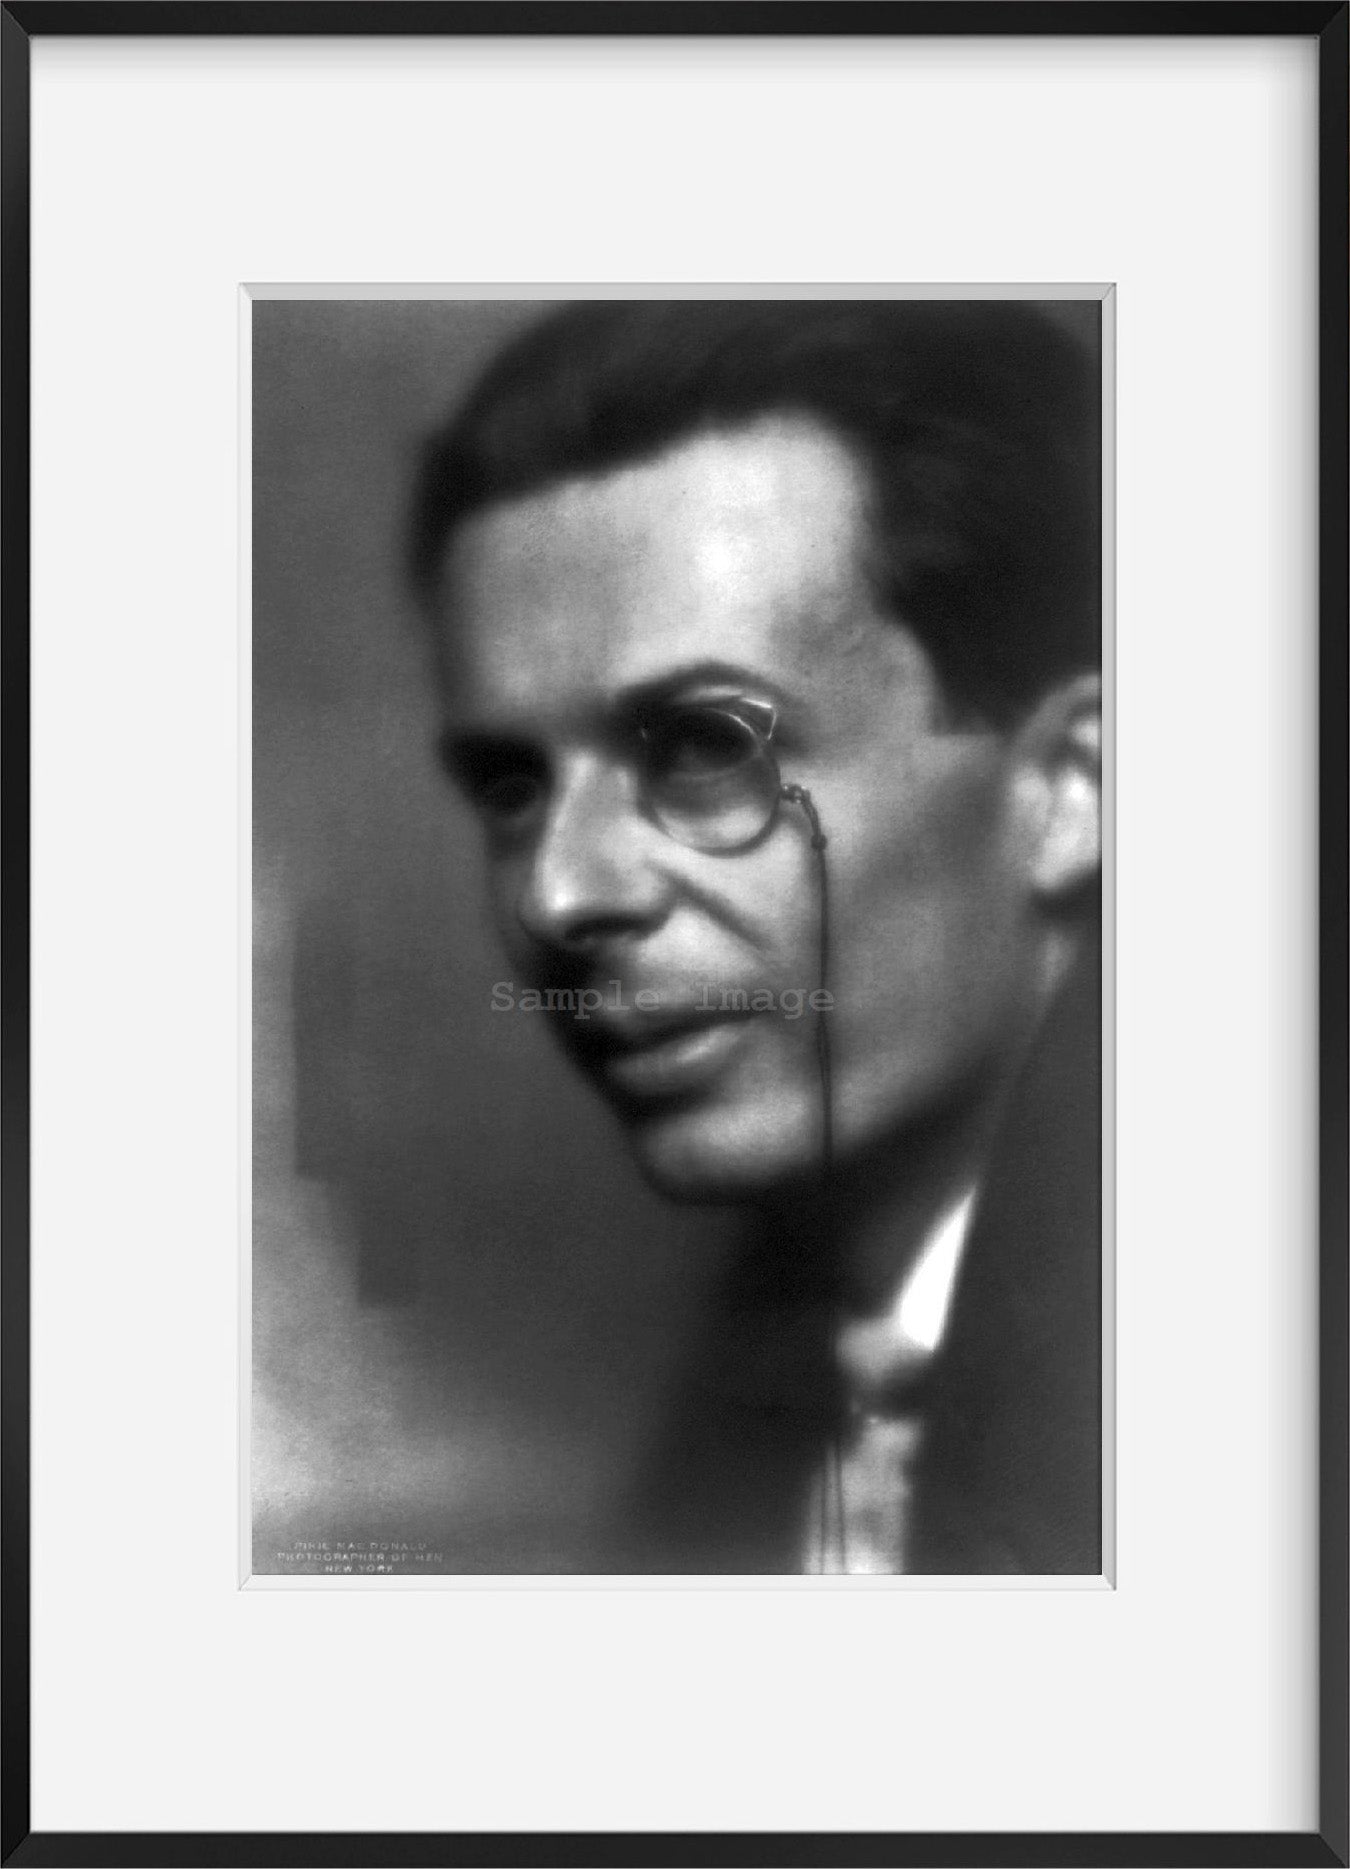 Photo: Aldous Leonard Huxley, 1894-1963, English writer, Brave New World, essays, edi